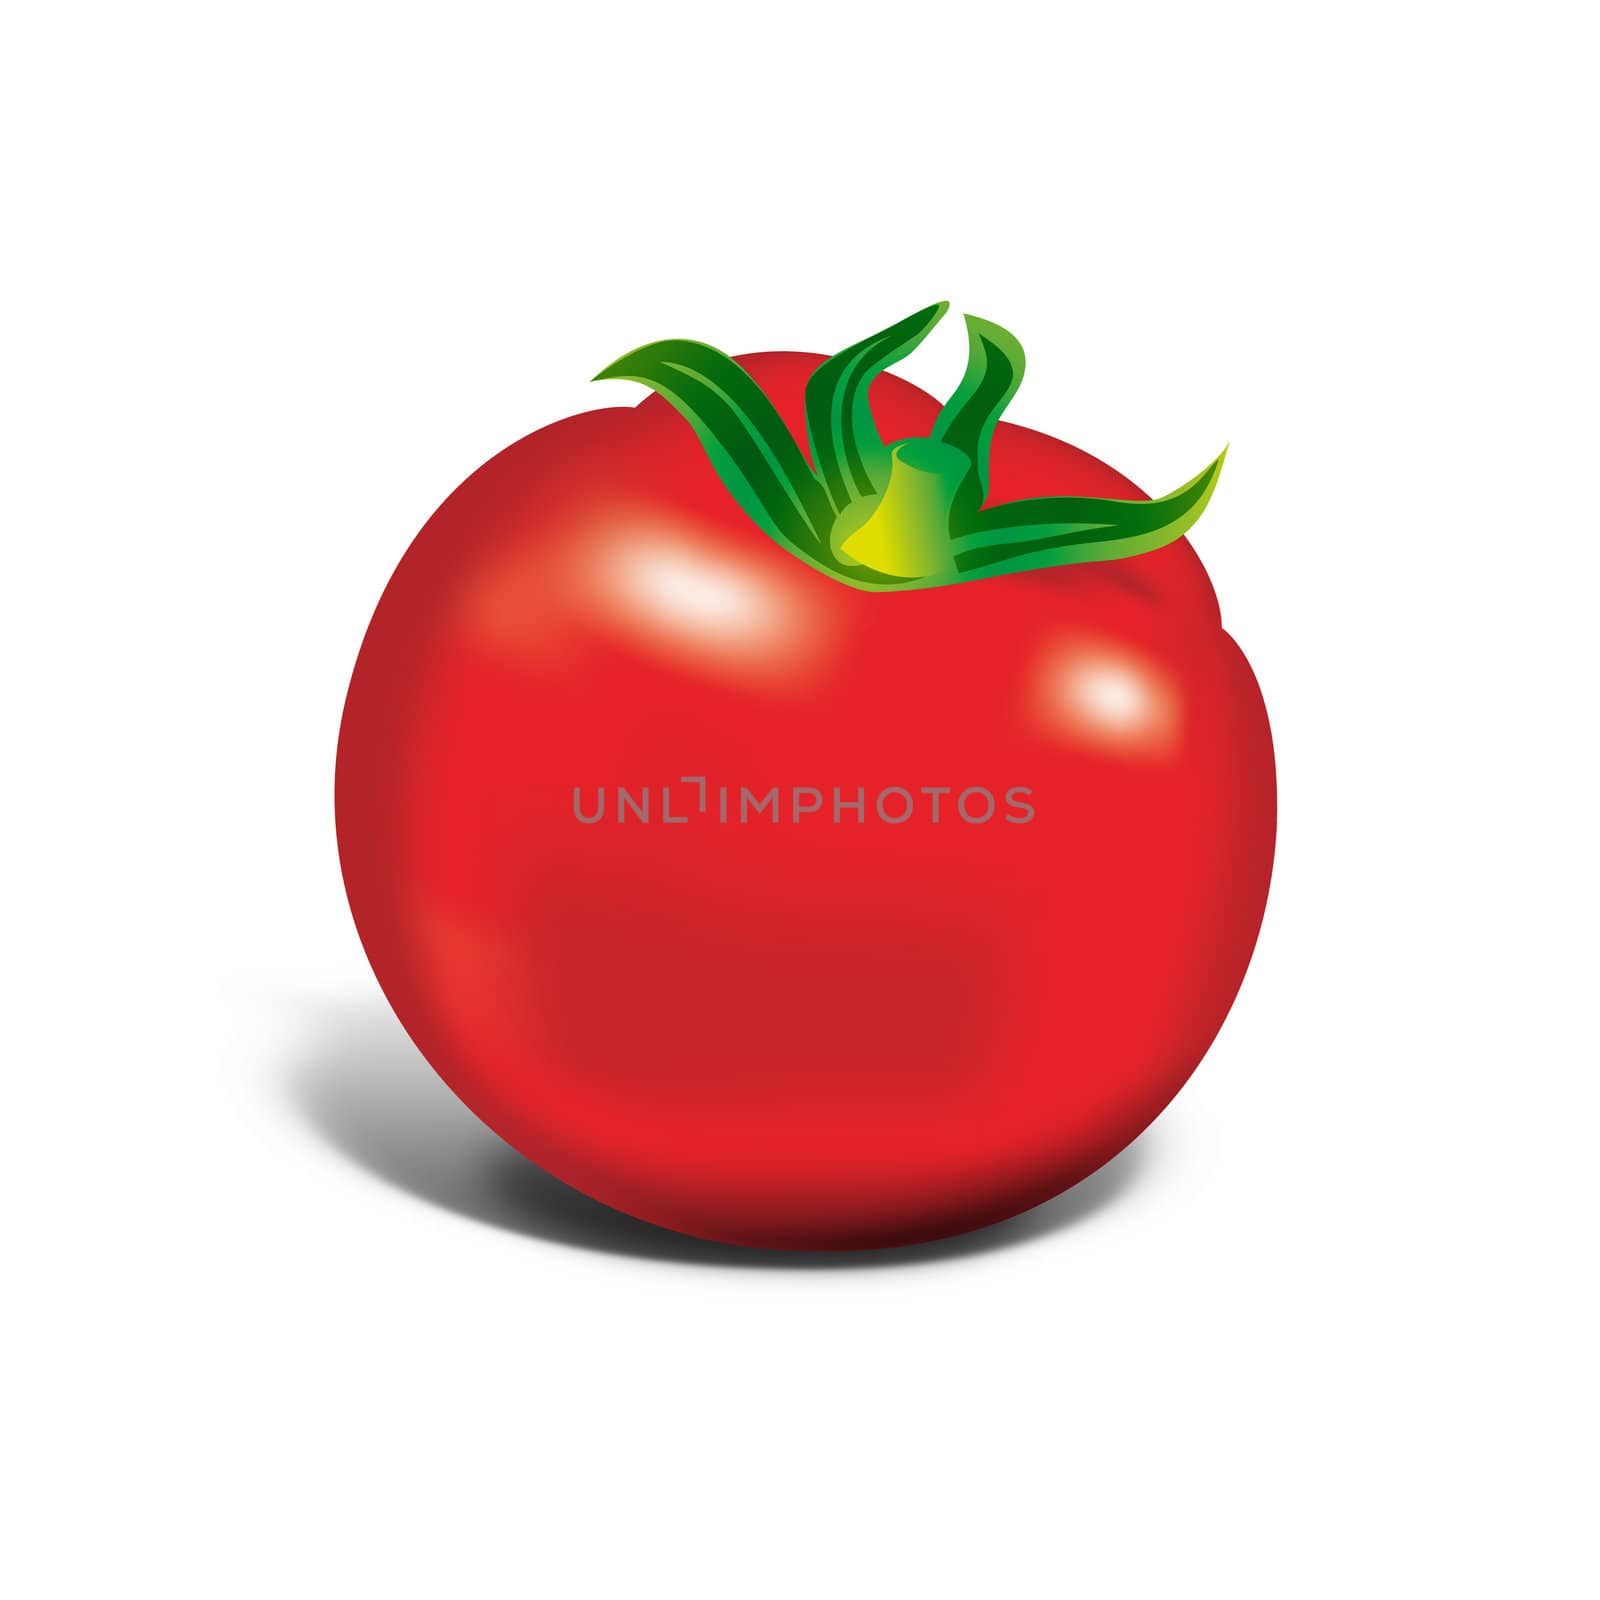 Red tomato on white background, illustration